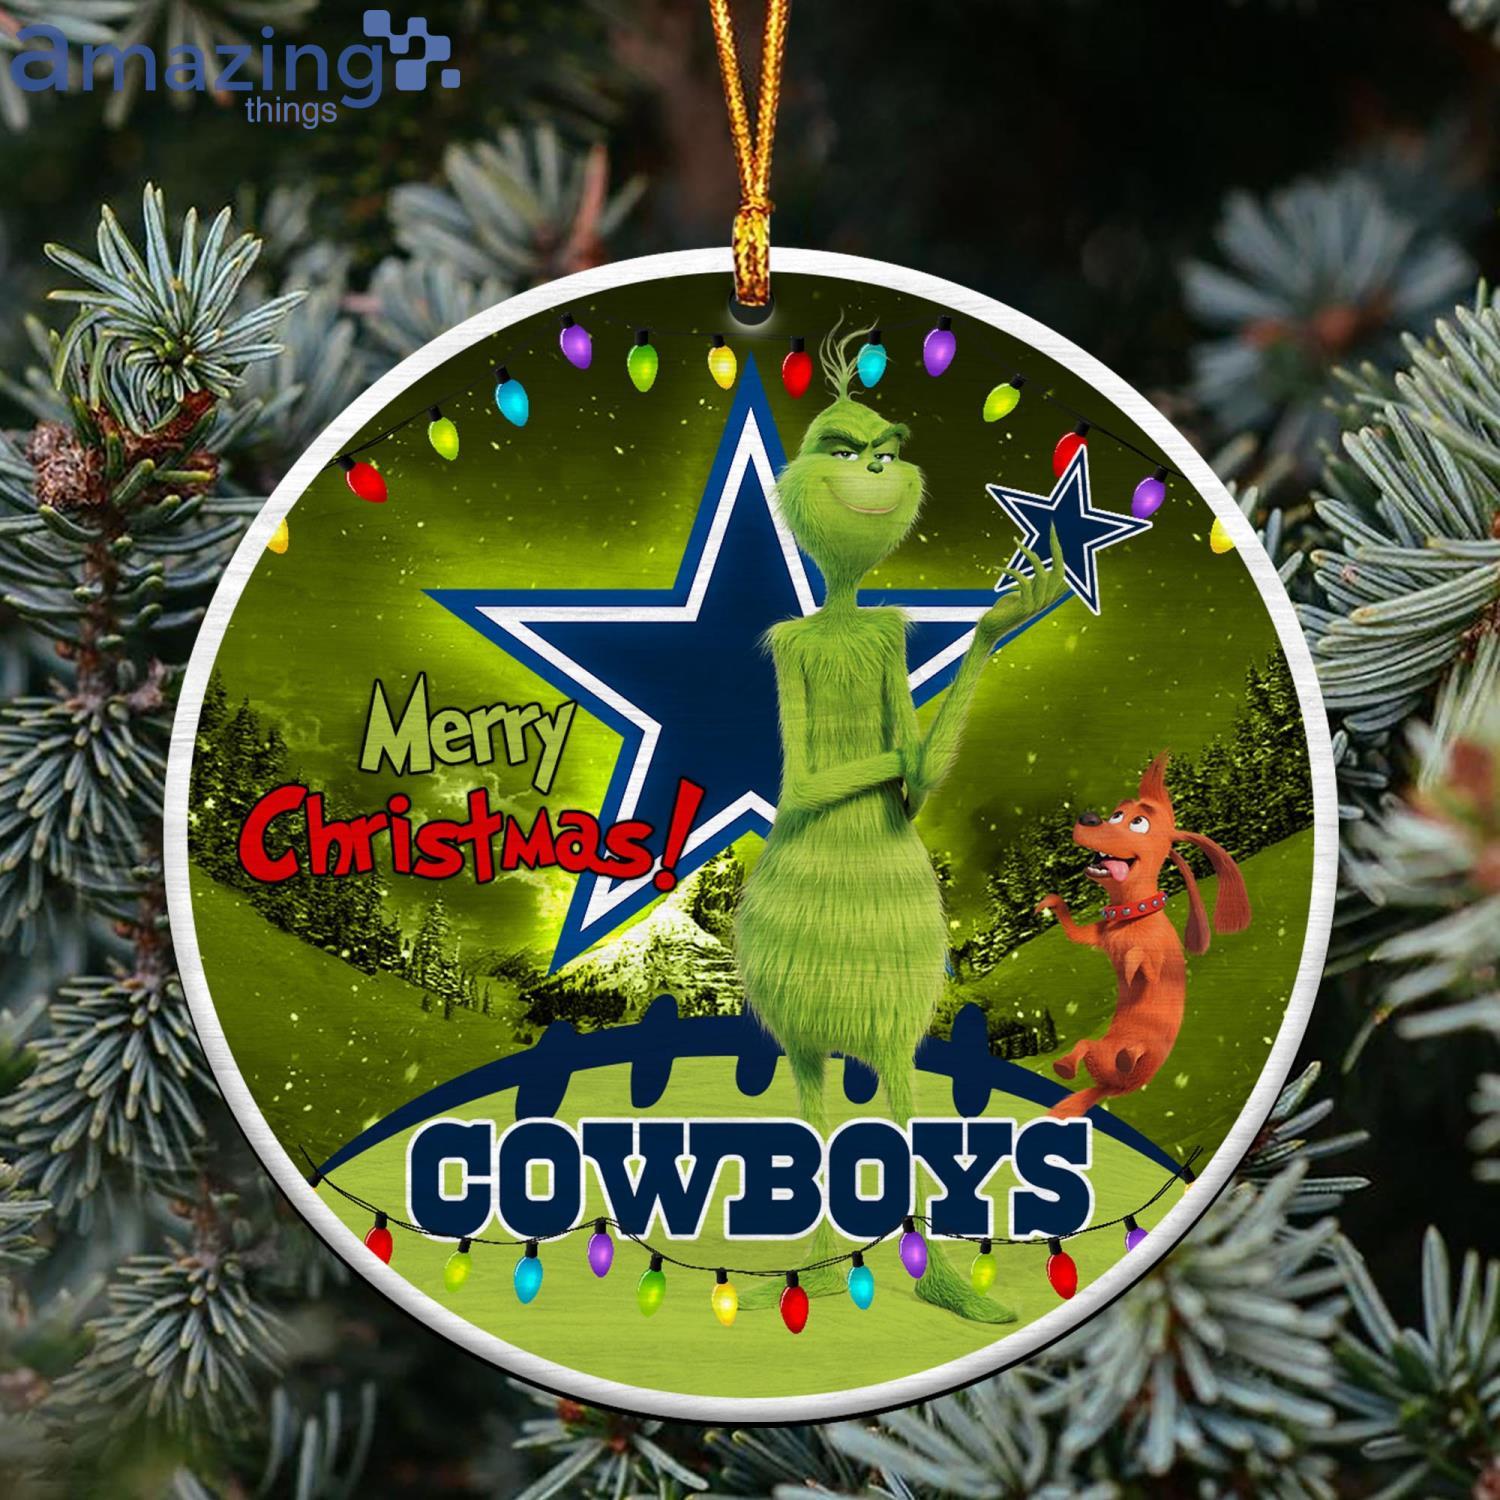 dallas cowboys christmas ornaments